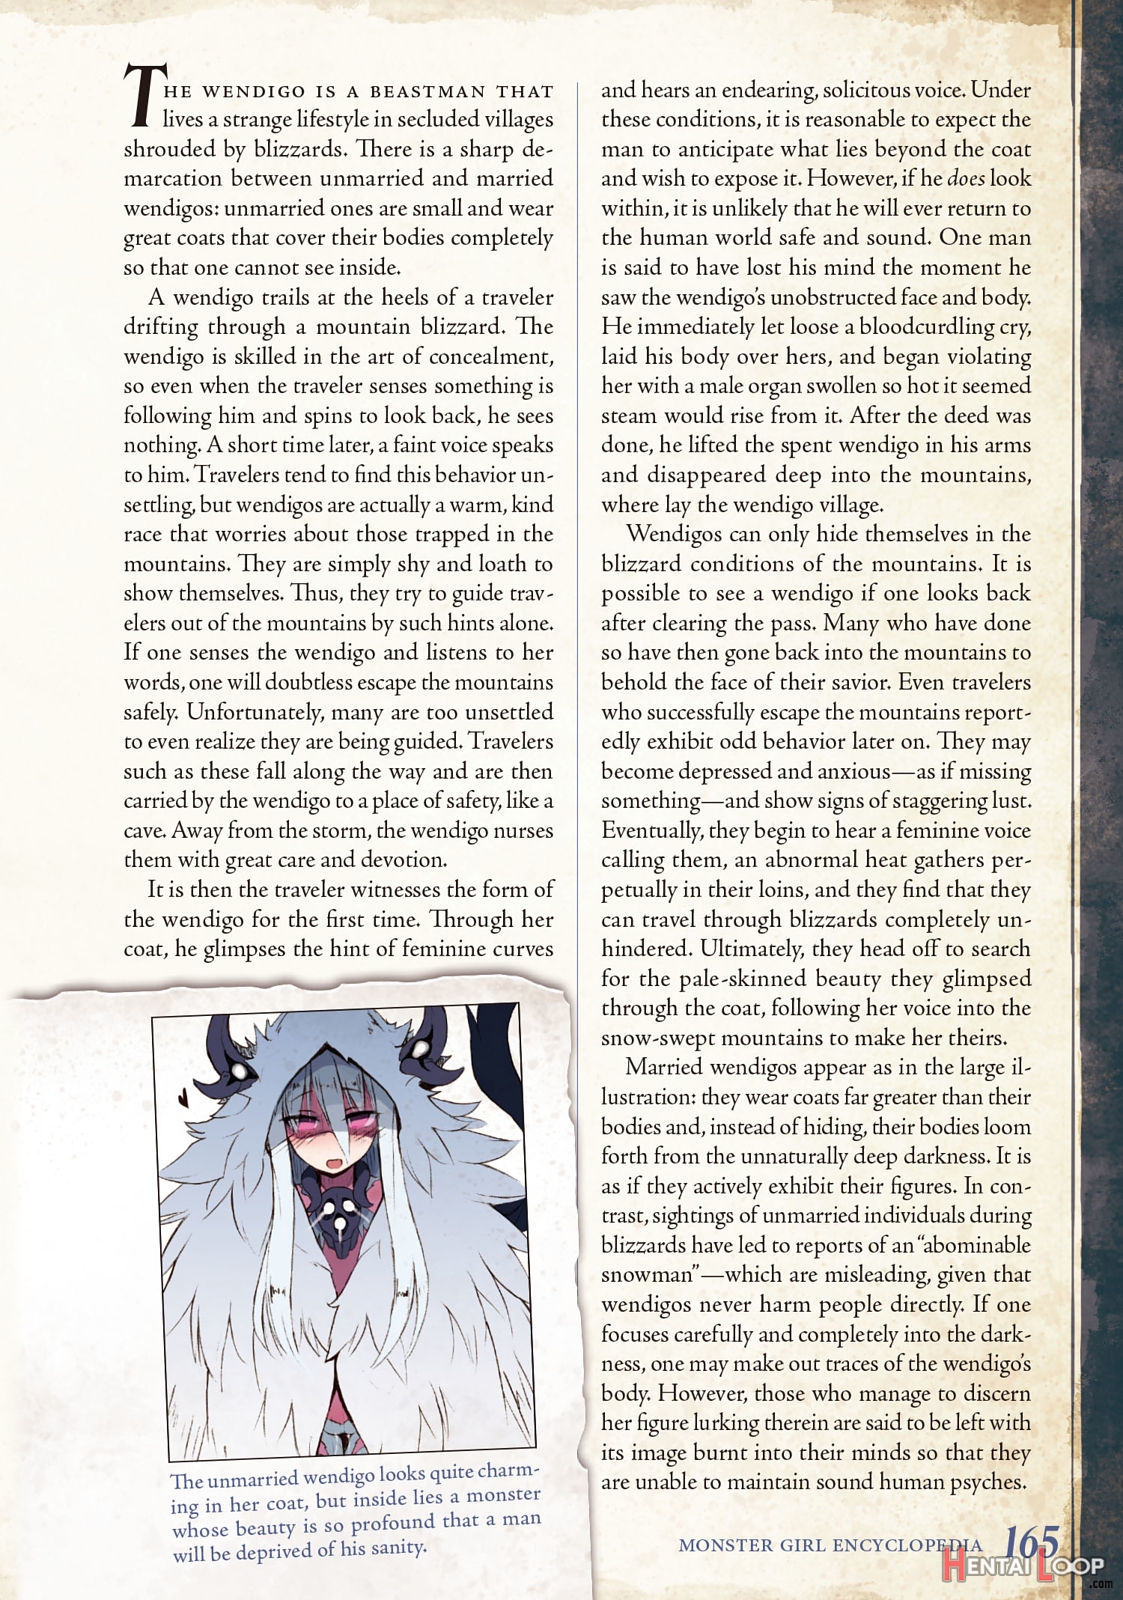 Monster Girl Encyclopedia Vol. 2 page 166